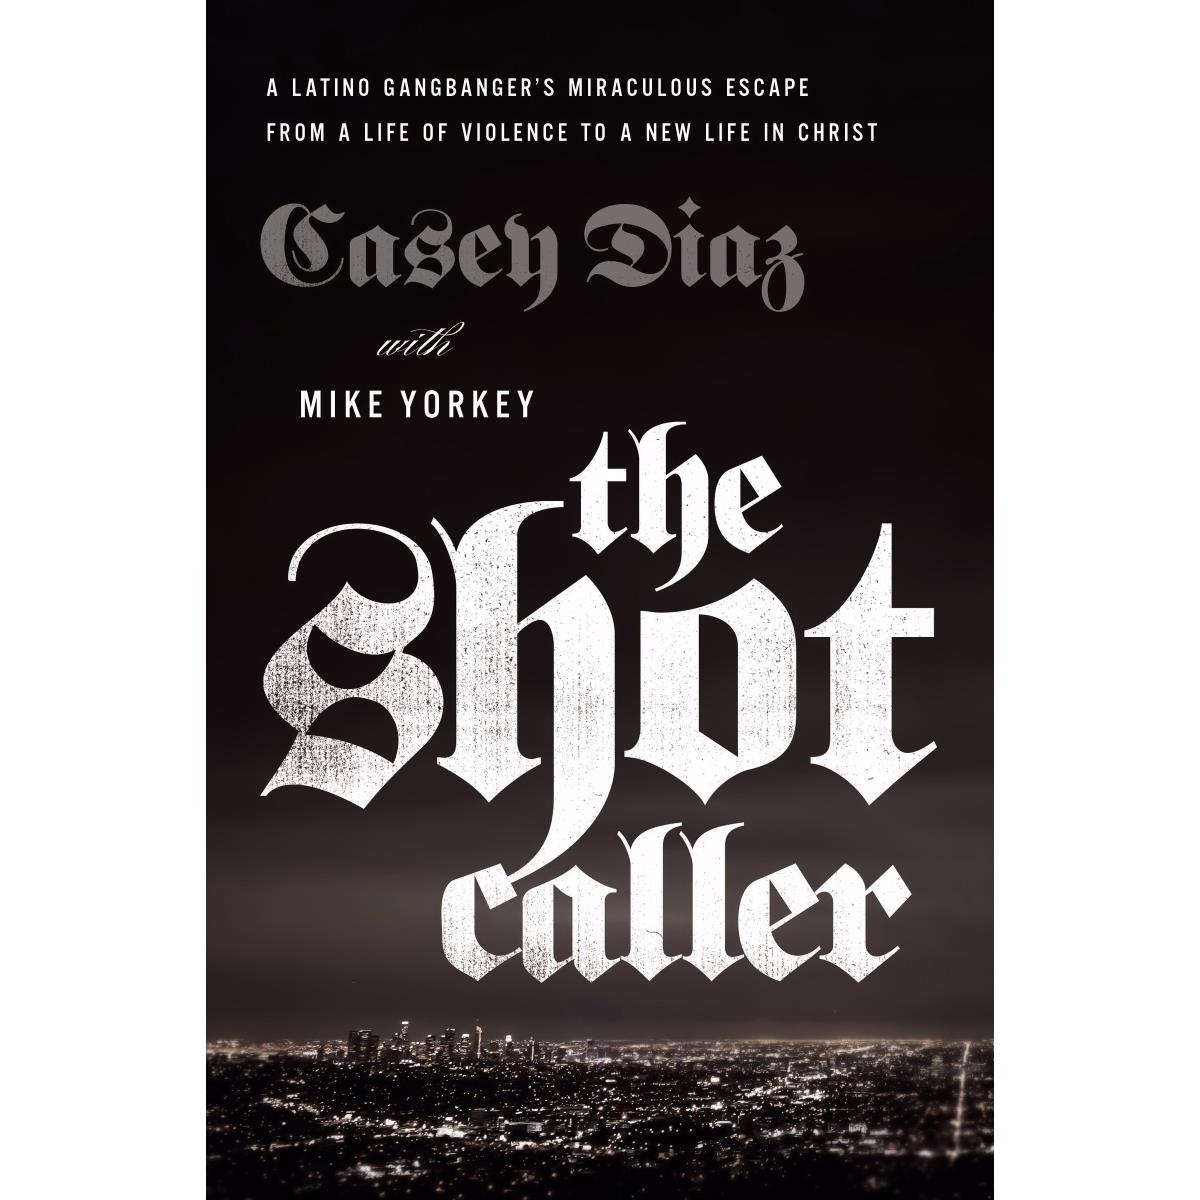 163942 The Shot Caller By Diaz Casey